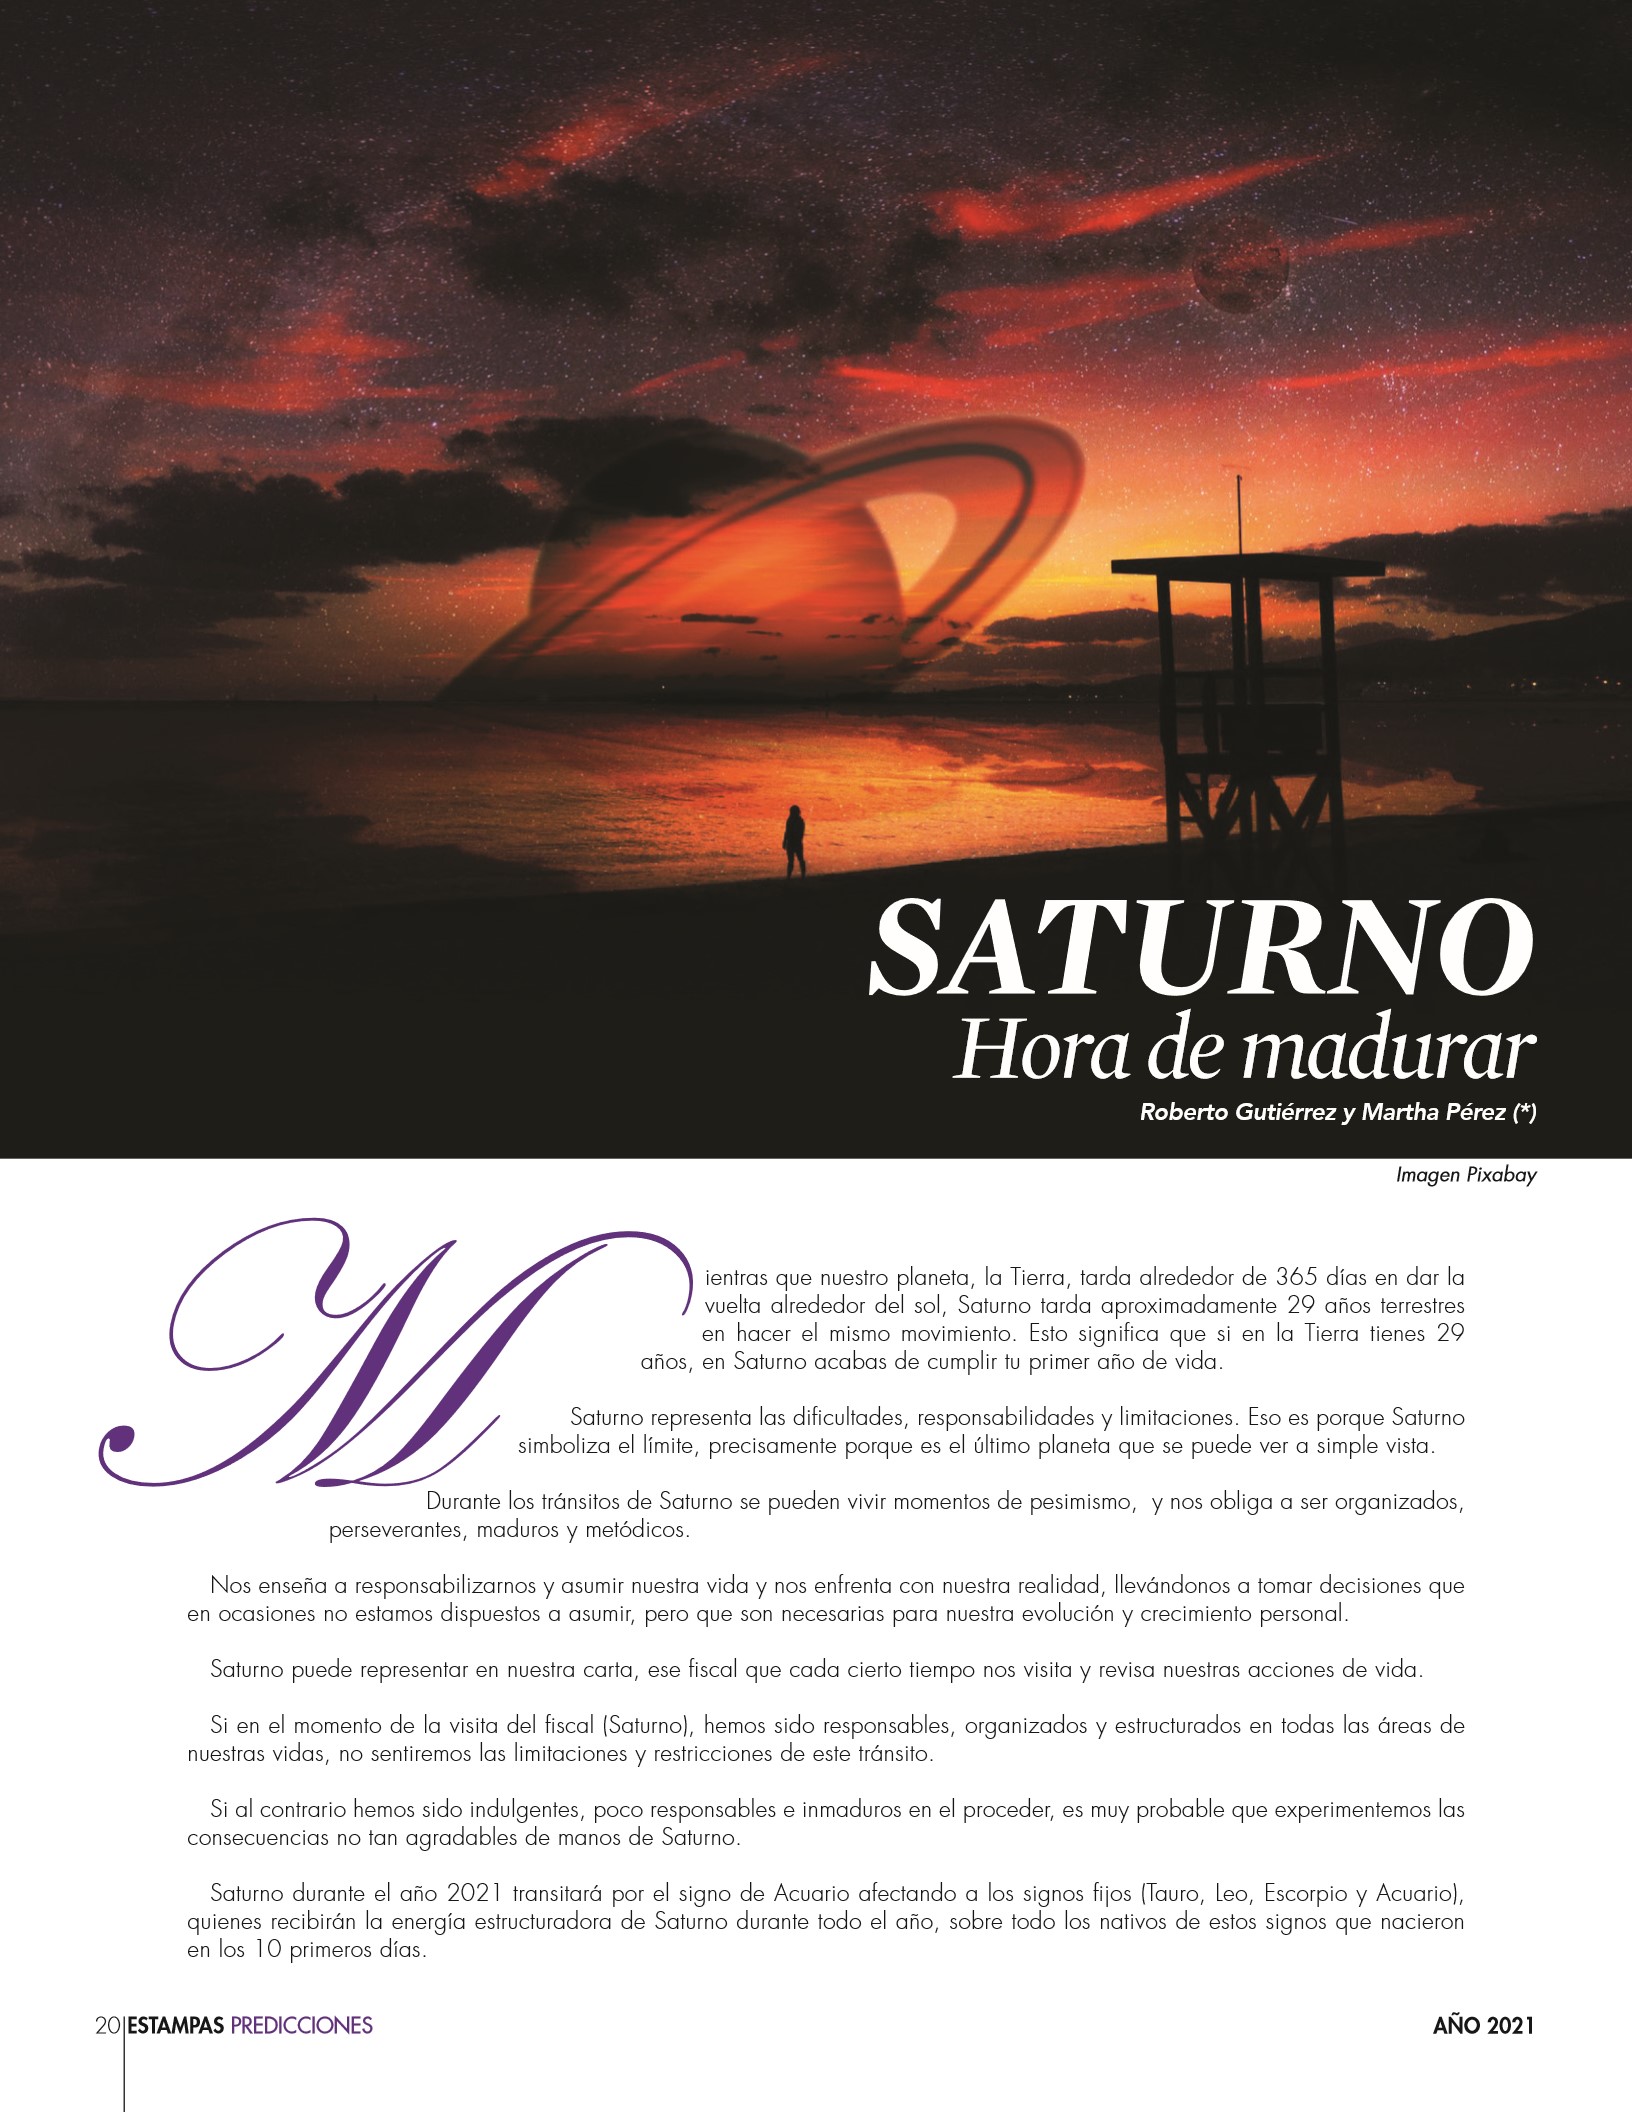 26-REV Roberto Gutiérrez y Martha Pérez - Saturno: Hora de madurar 